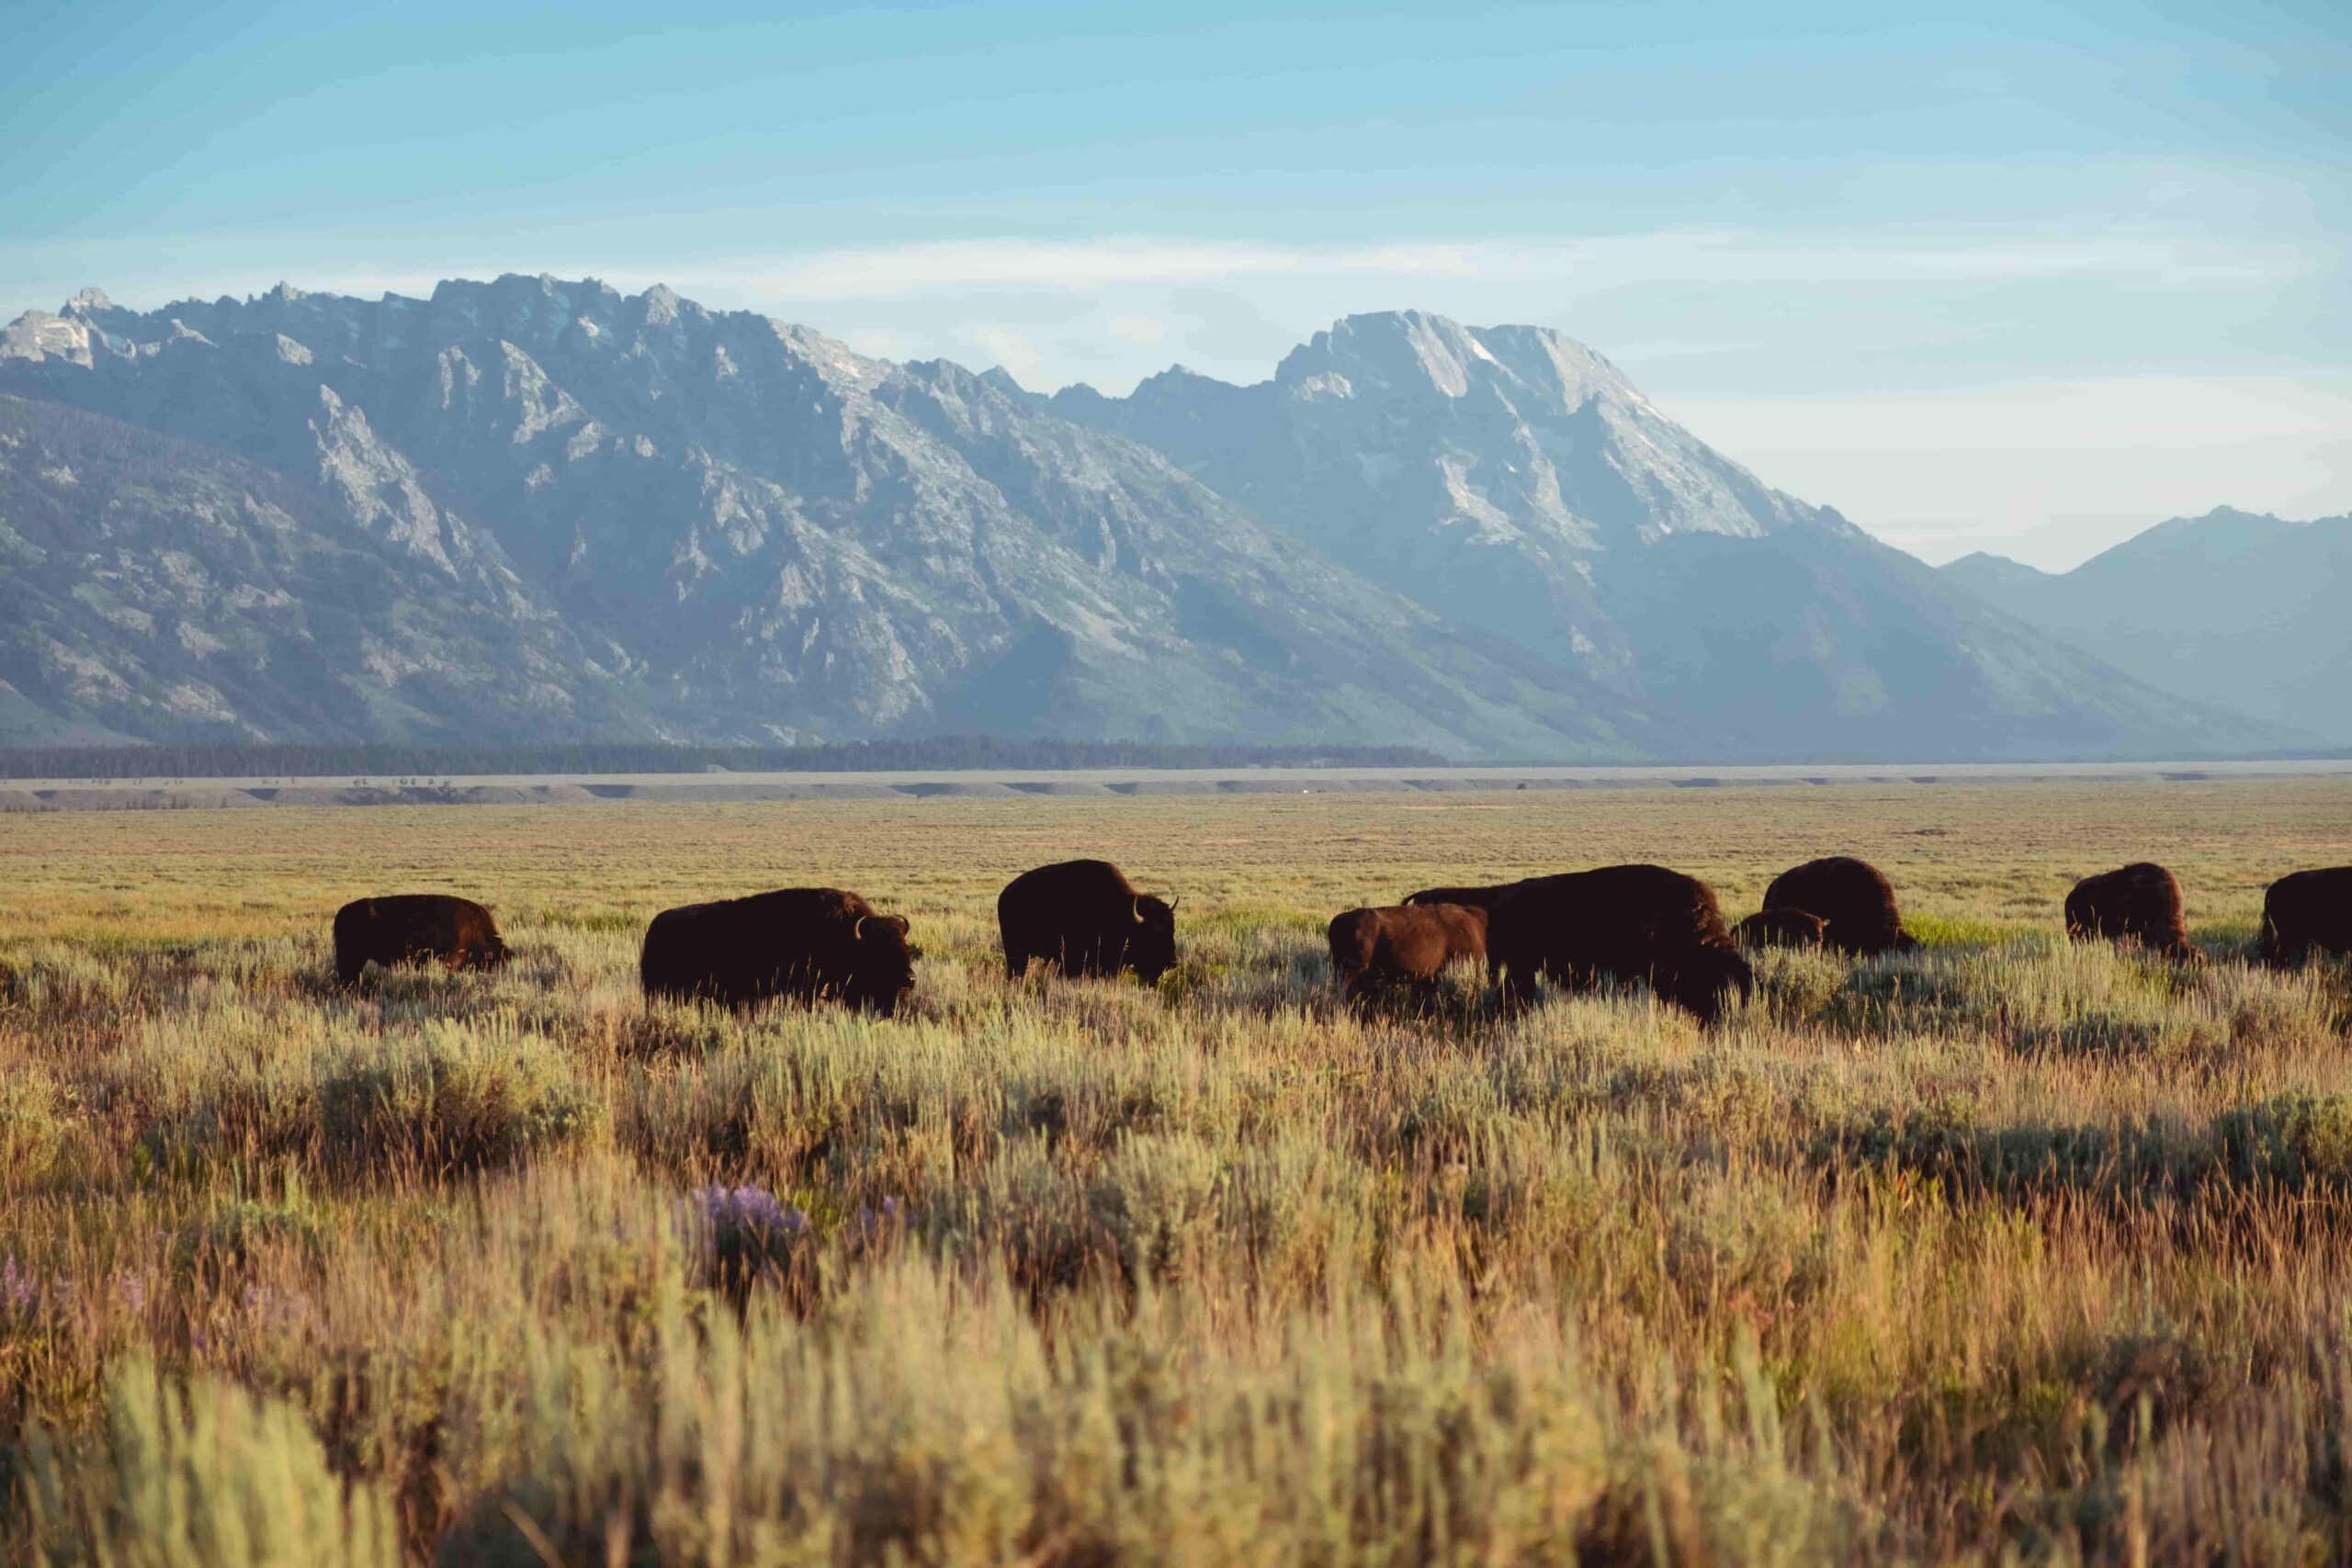 In a barren land, American bison graze on grass beside a mountain.